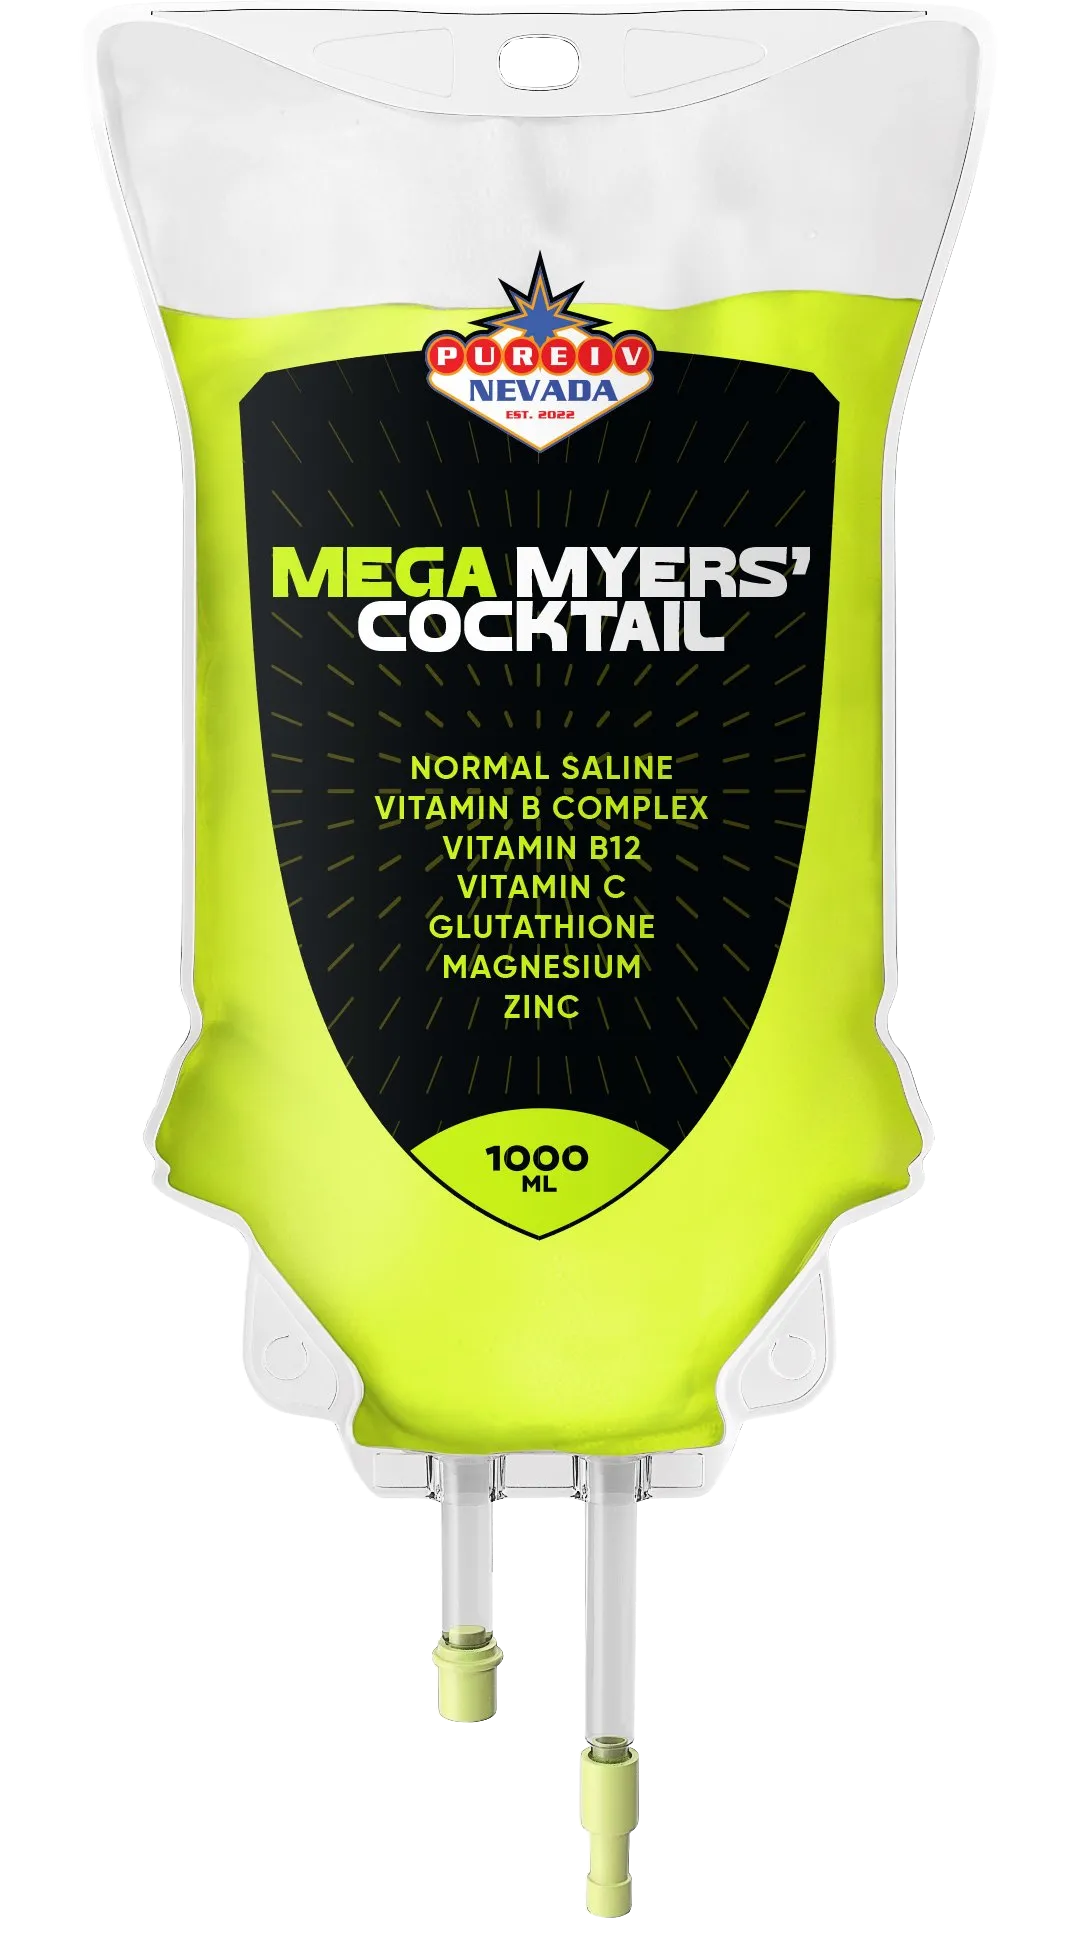 MEGA MYERS' COCKTAIL